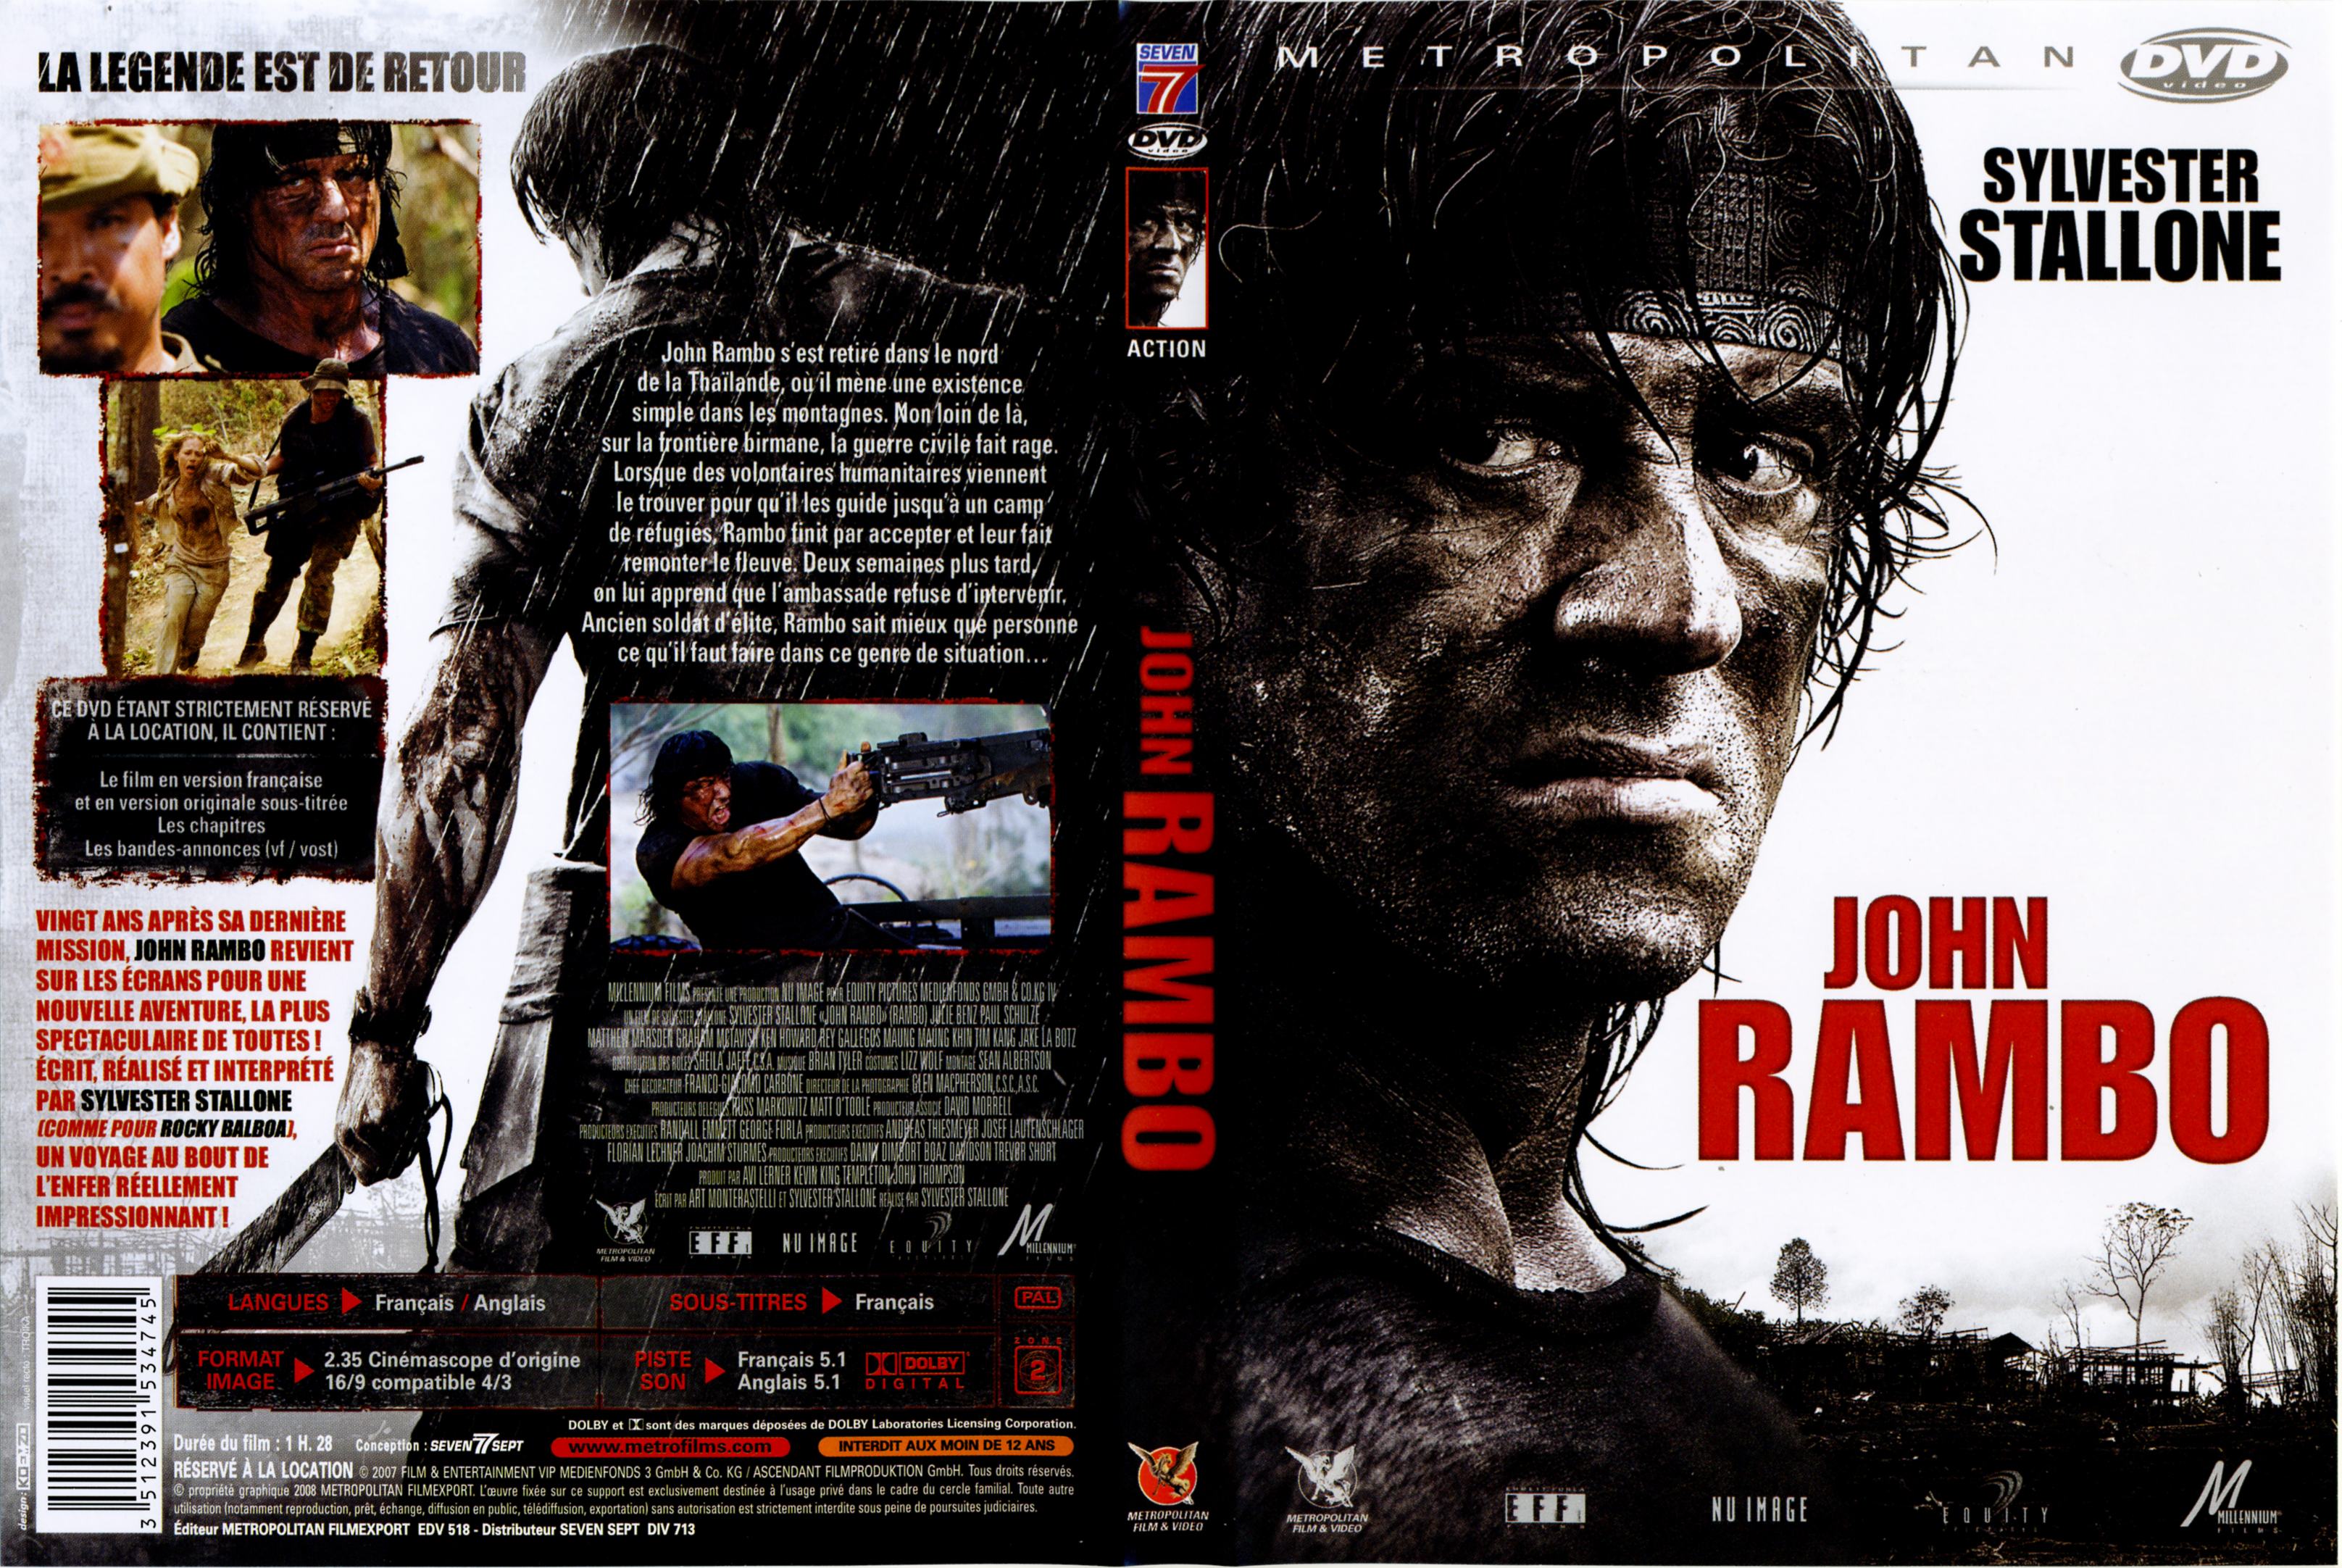 Jaquette DVD John Rambo